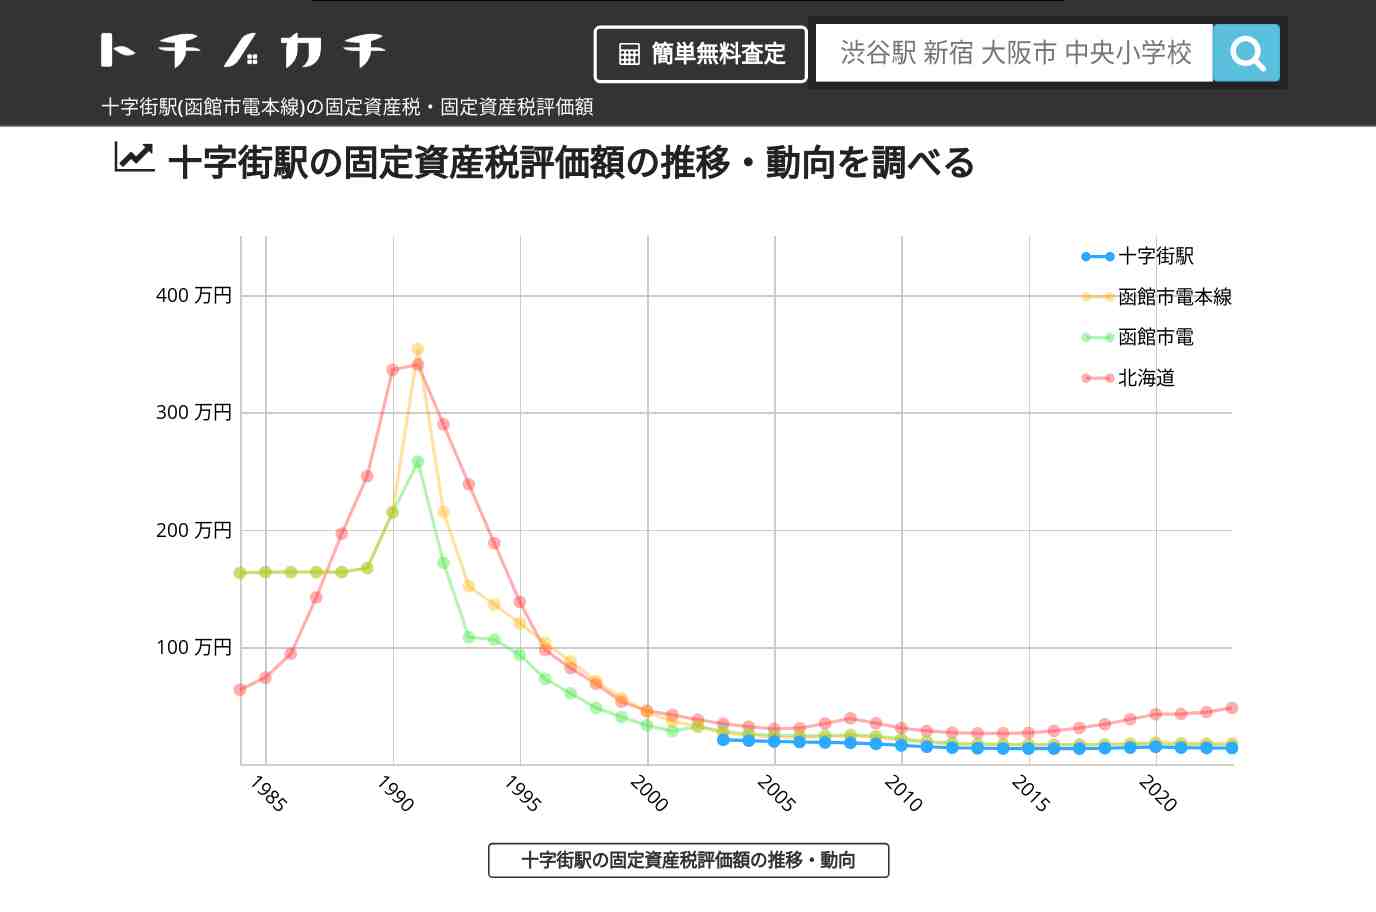 十字街駅(函館市電本線)の固定資産税・固定資産税評価額 | トチノカチ